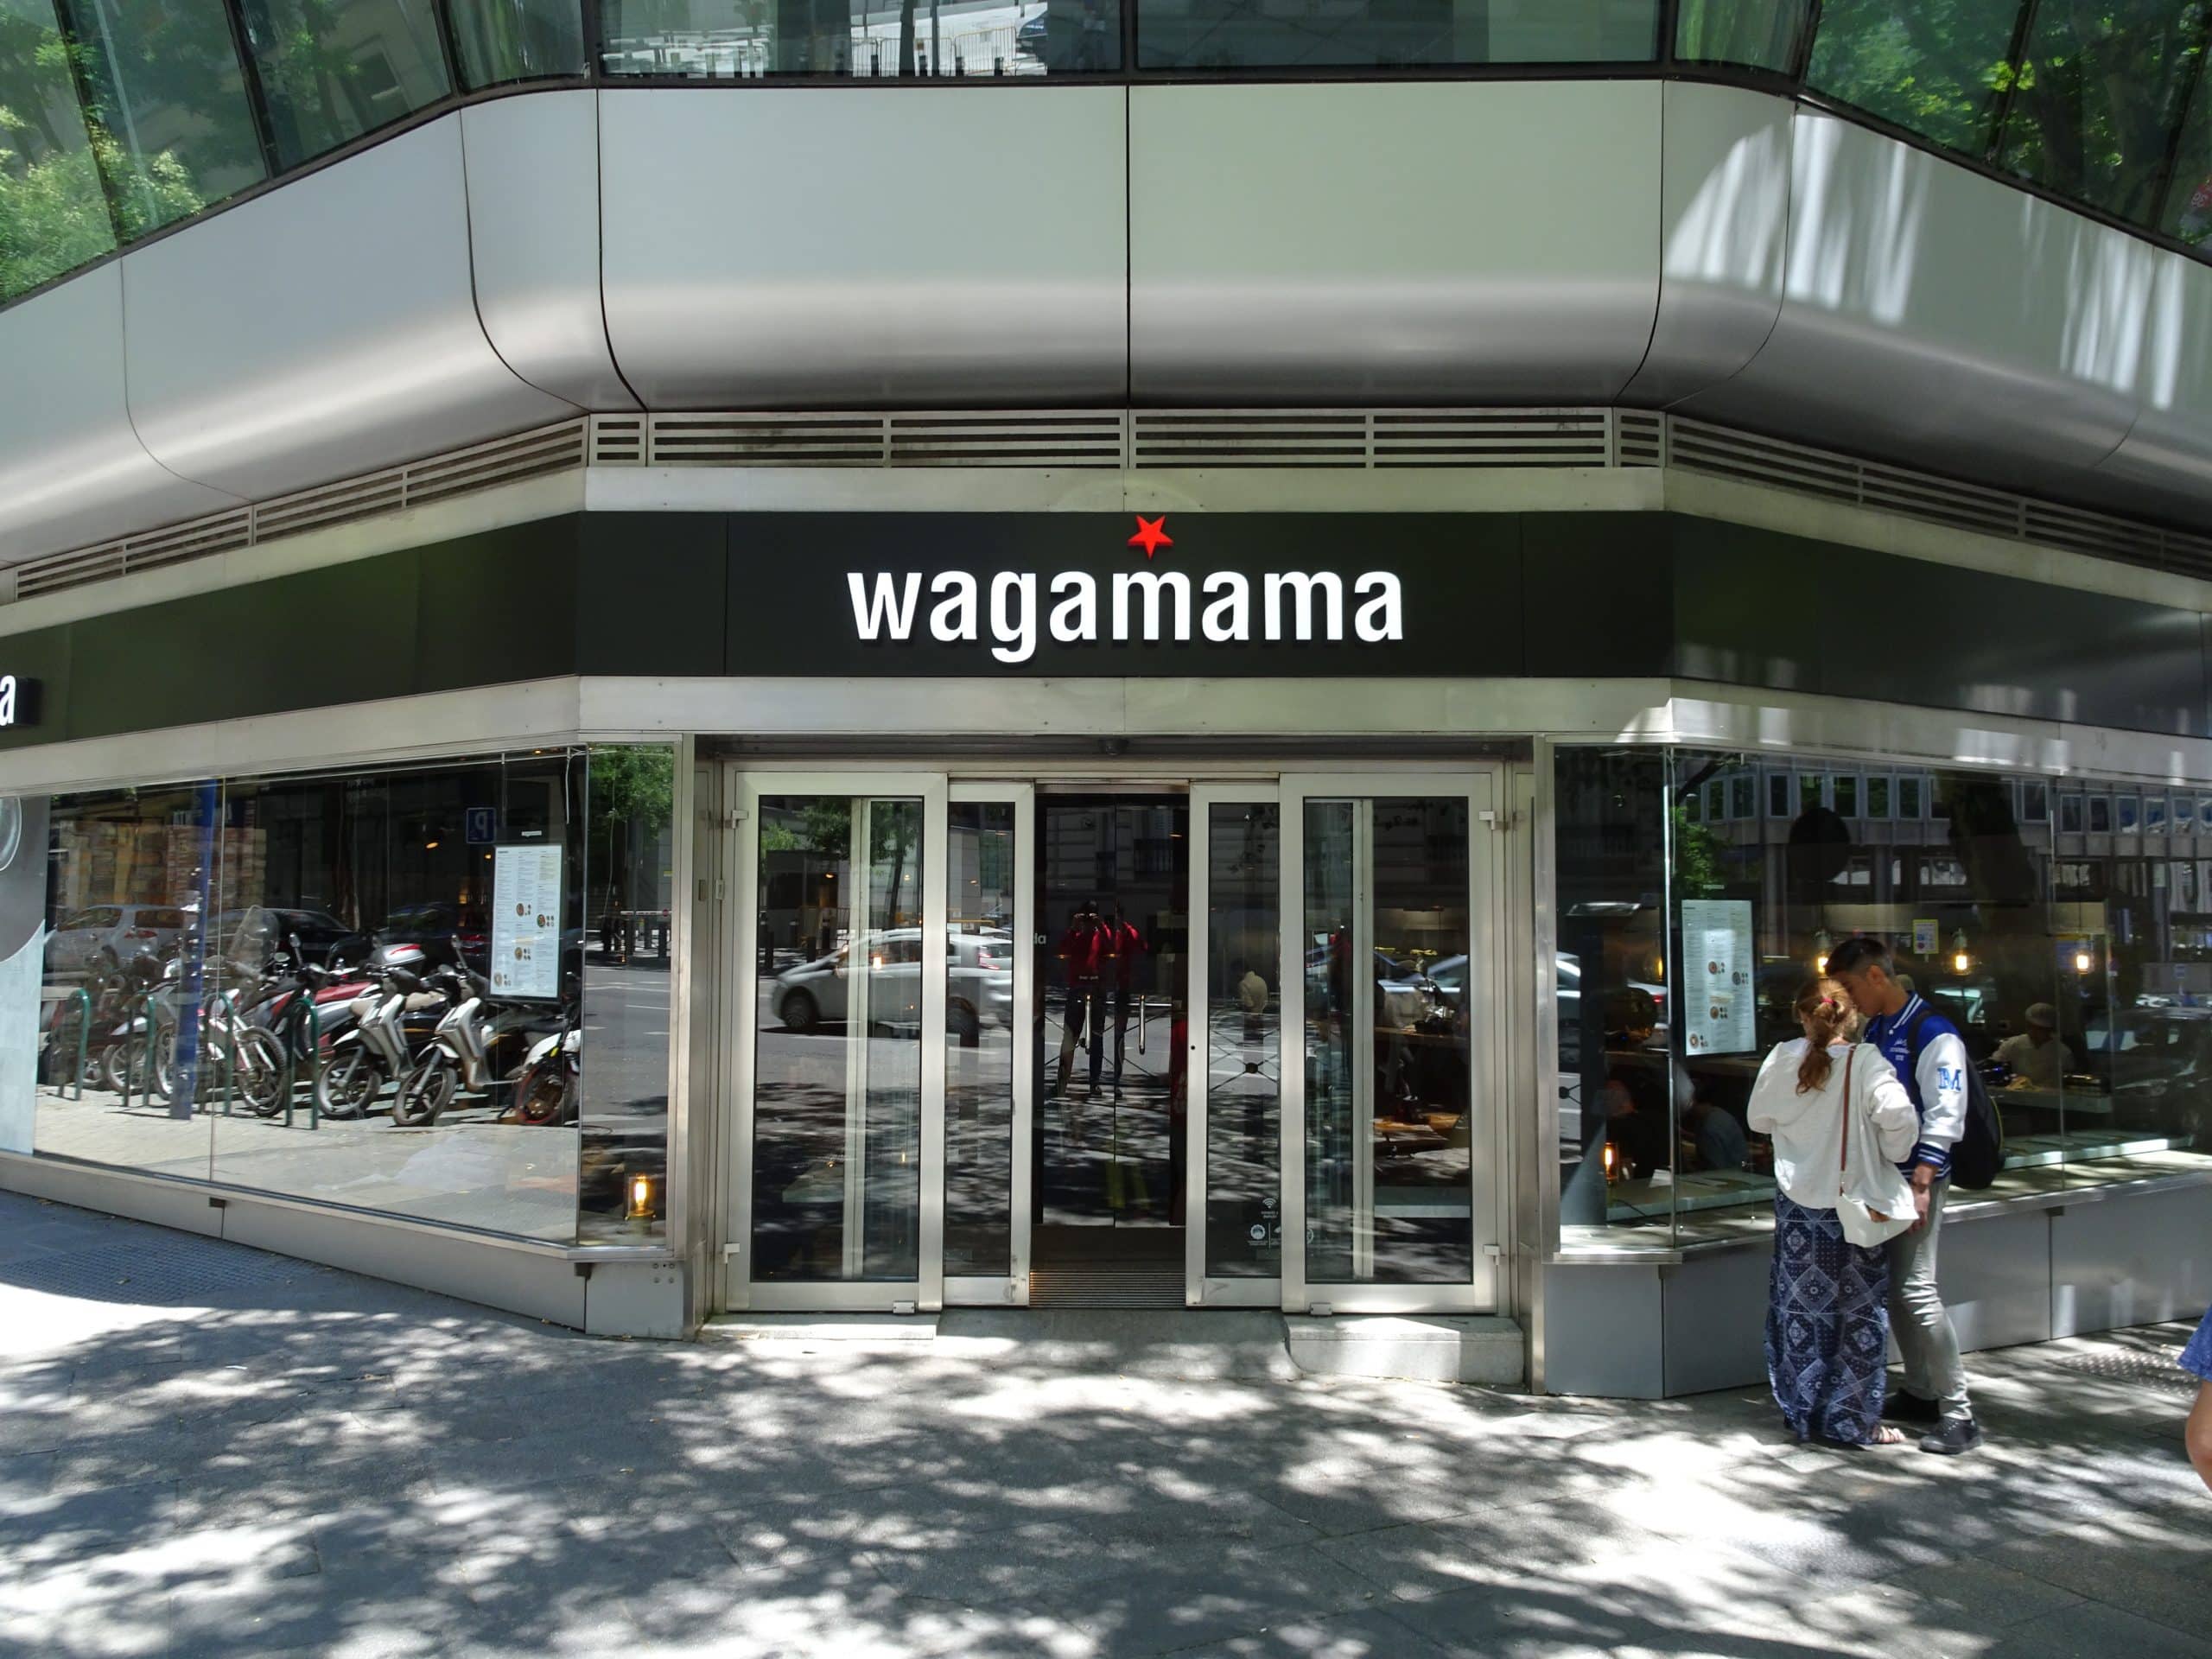 Wagamama in Madrid